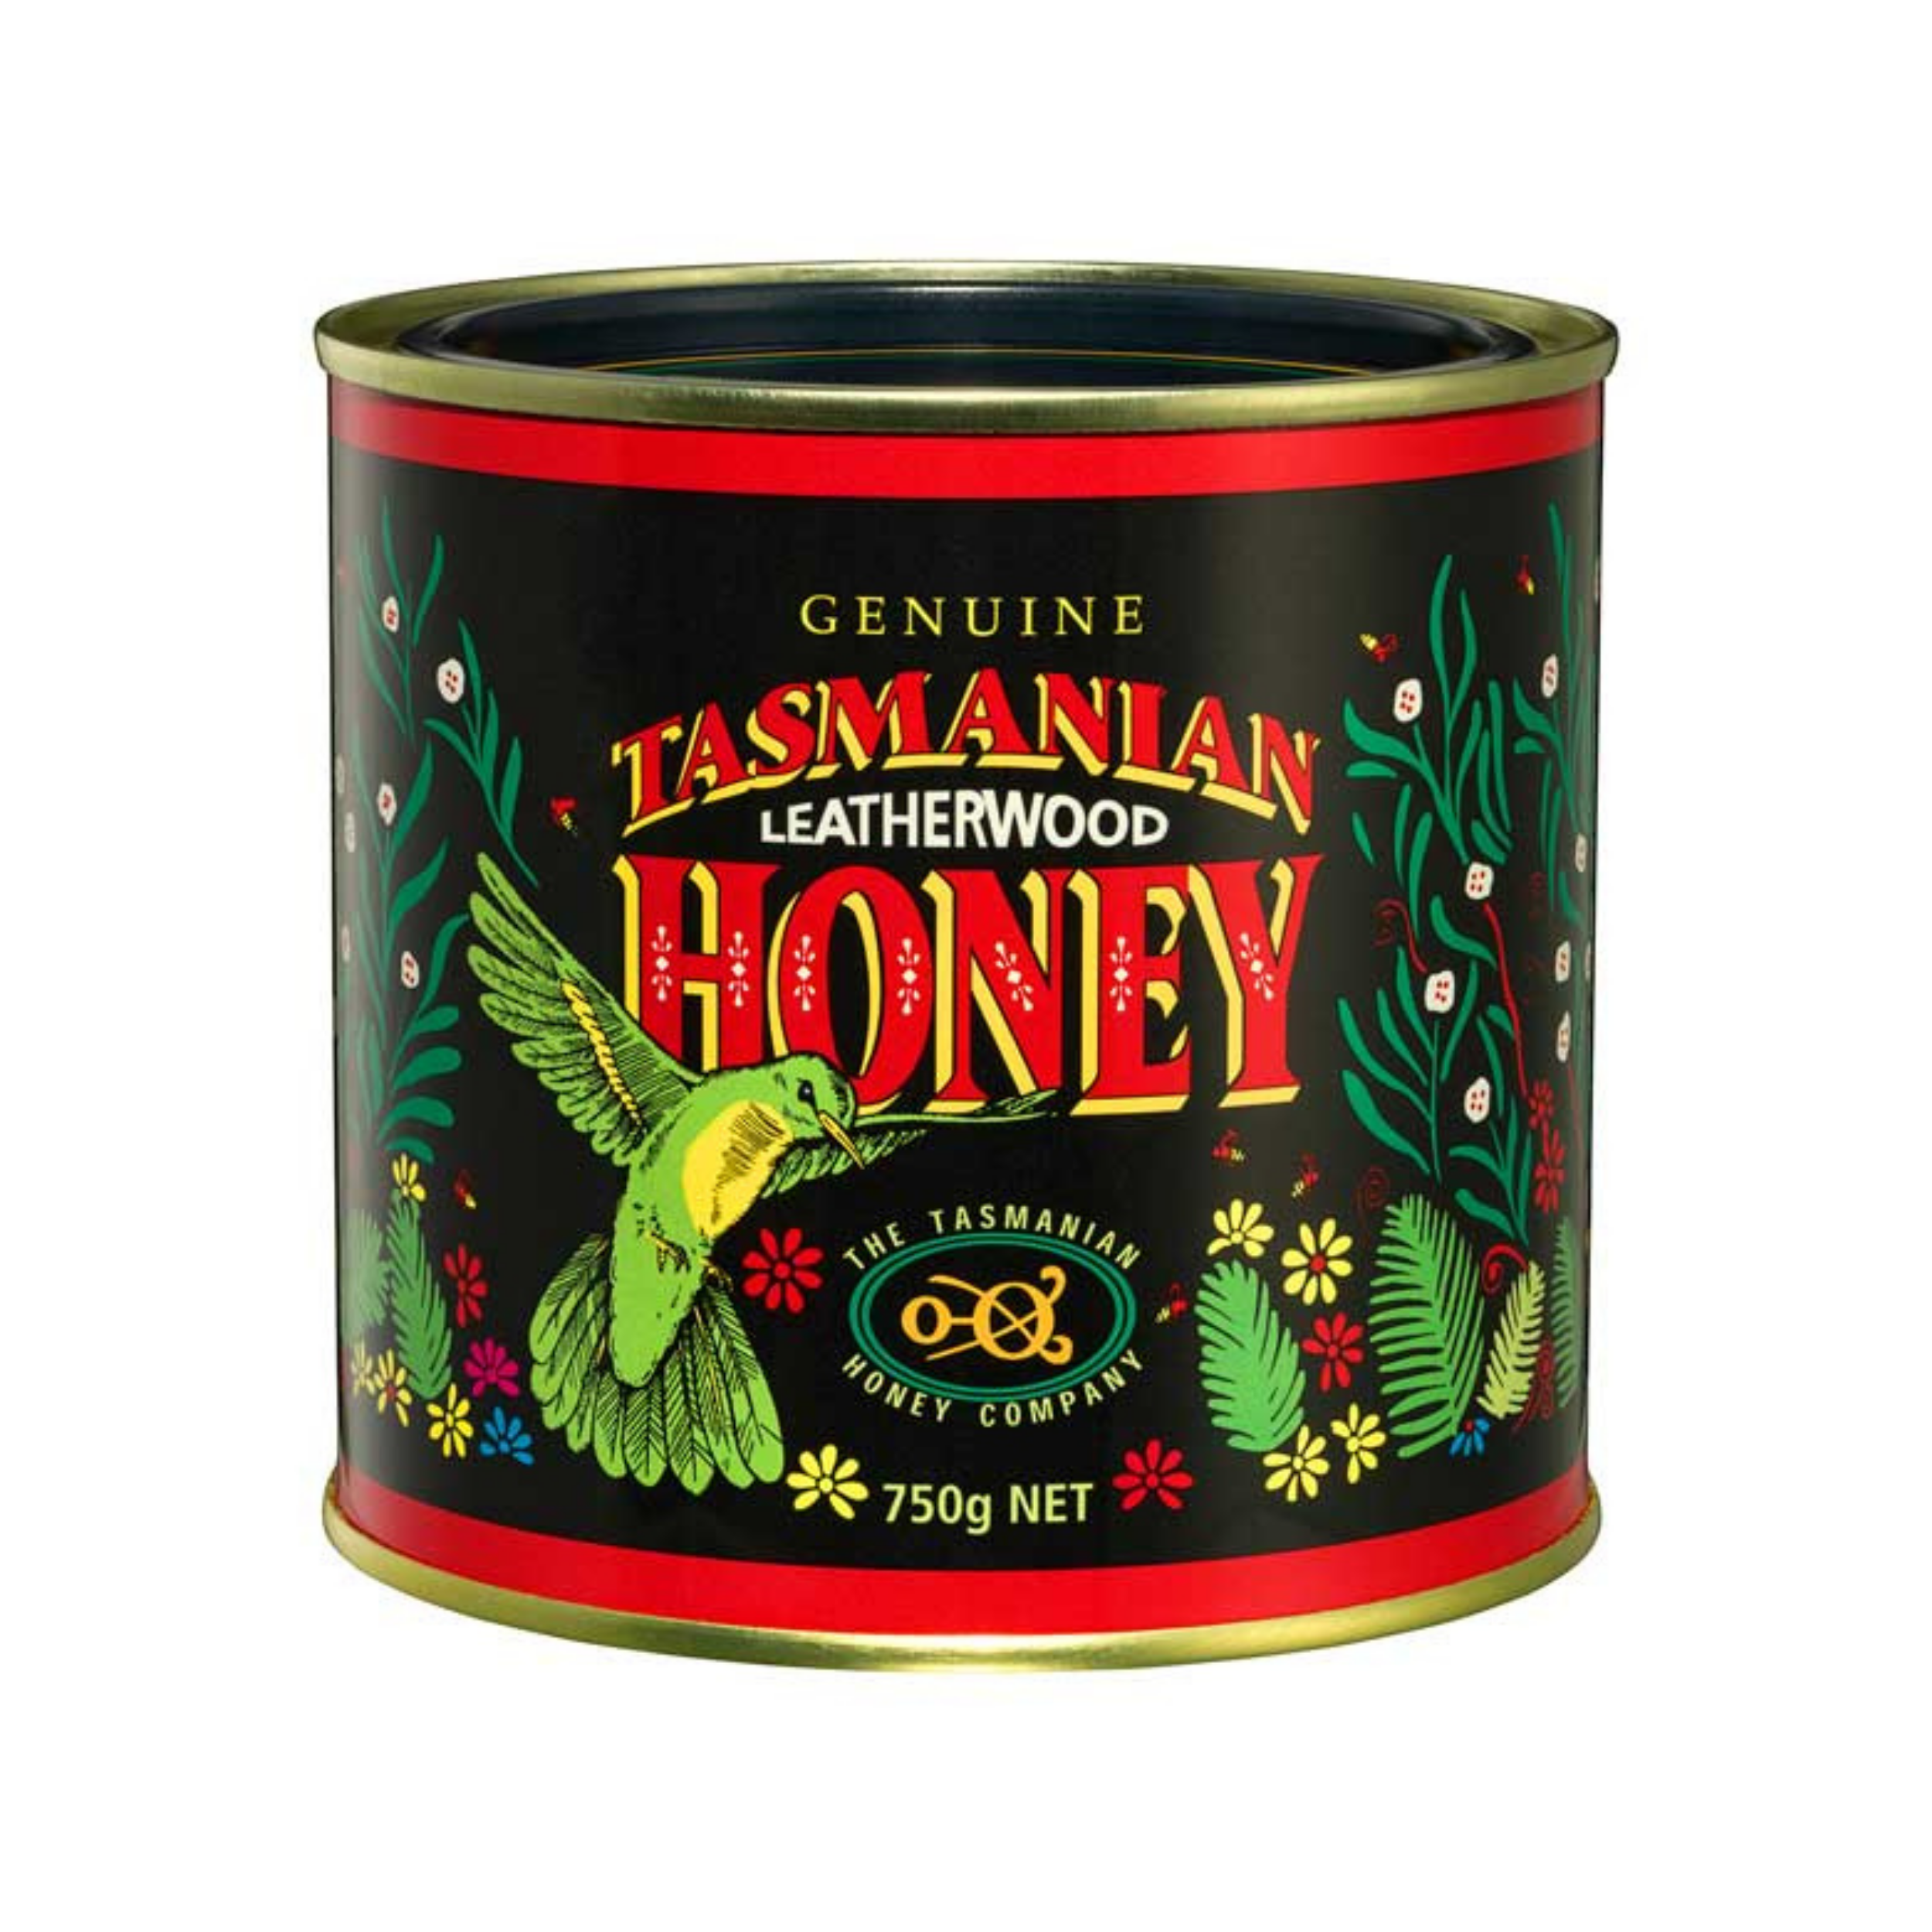 Tasmanian Leatherwood Honey 750g Tin